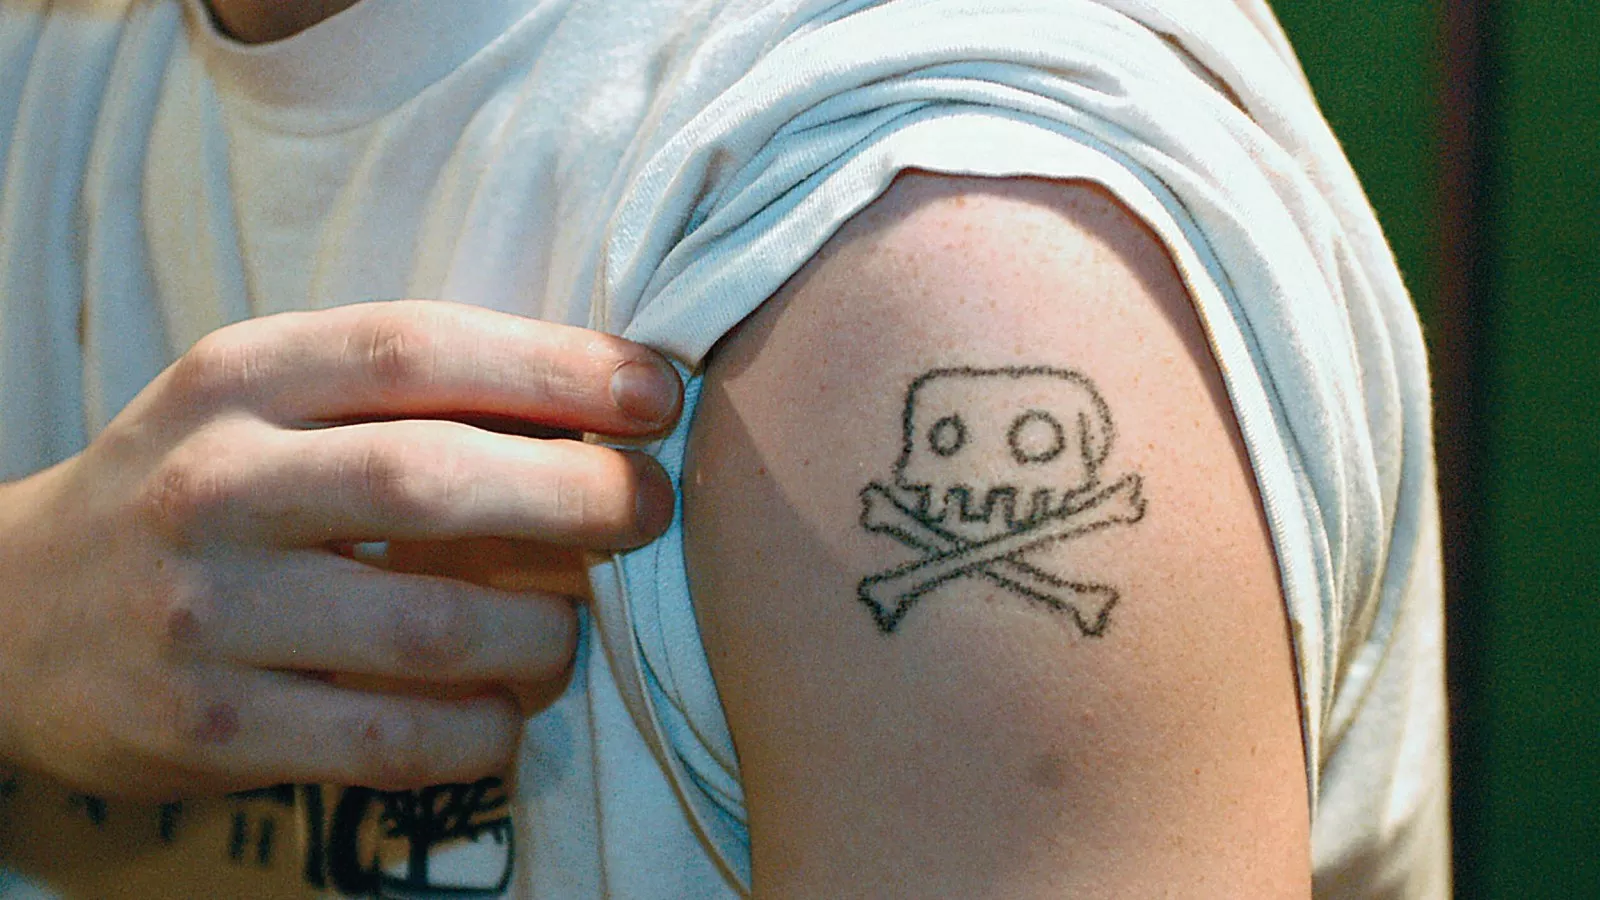 DIY Tattoos Make Irony Permanent